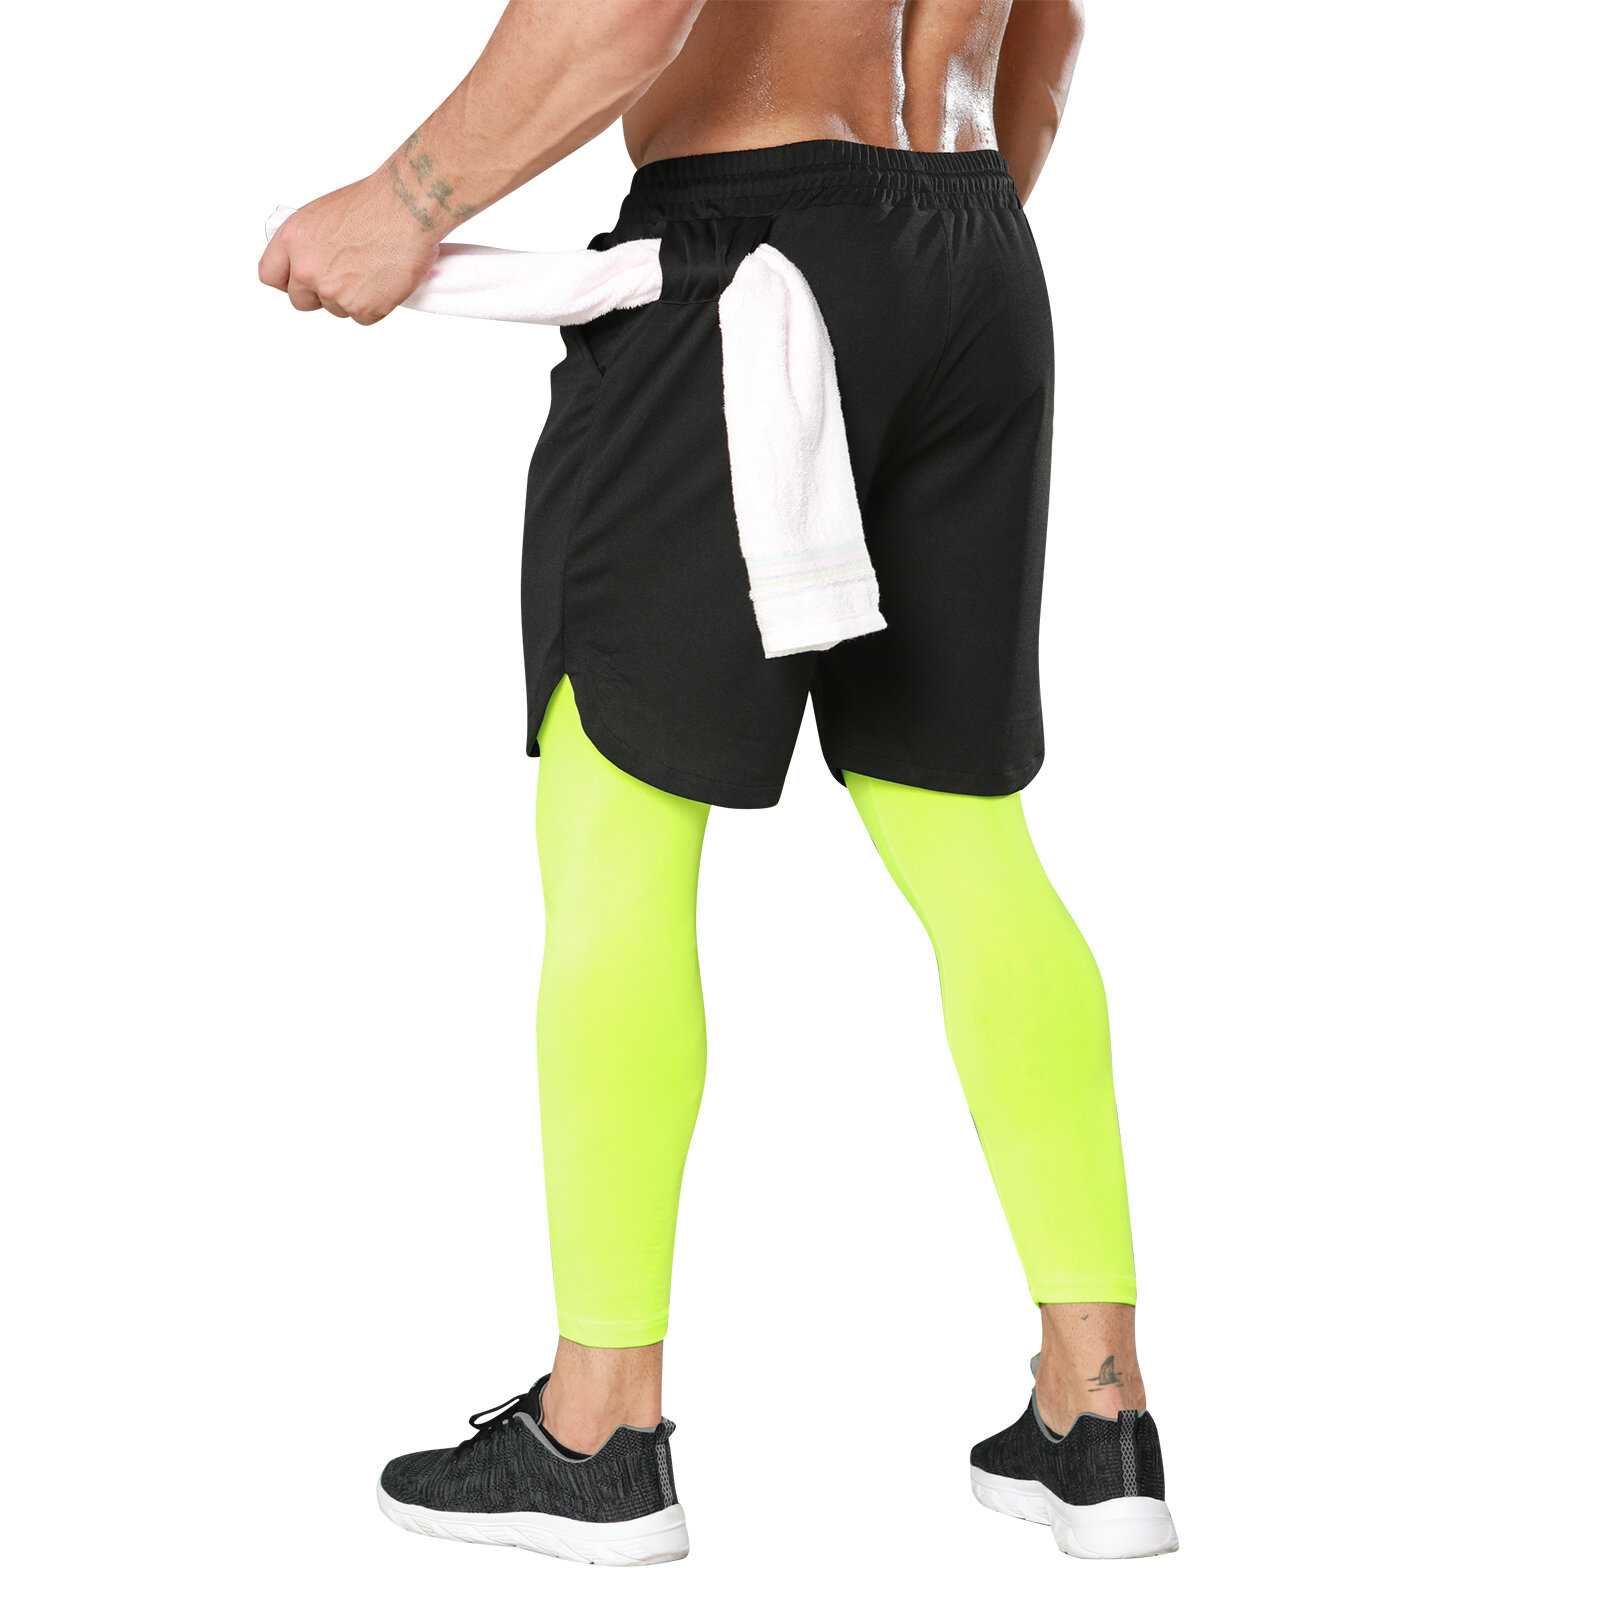 Men's 2 in 1 black running shorts and green gym legging - Drawstring closure,Elastic Waist band, Headphone Jack,zipper pocket.